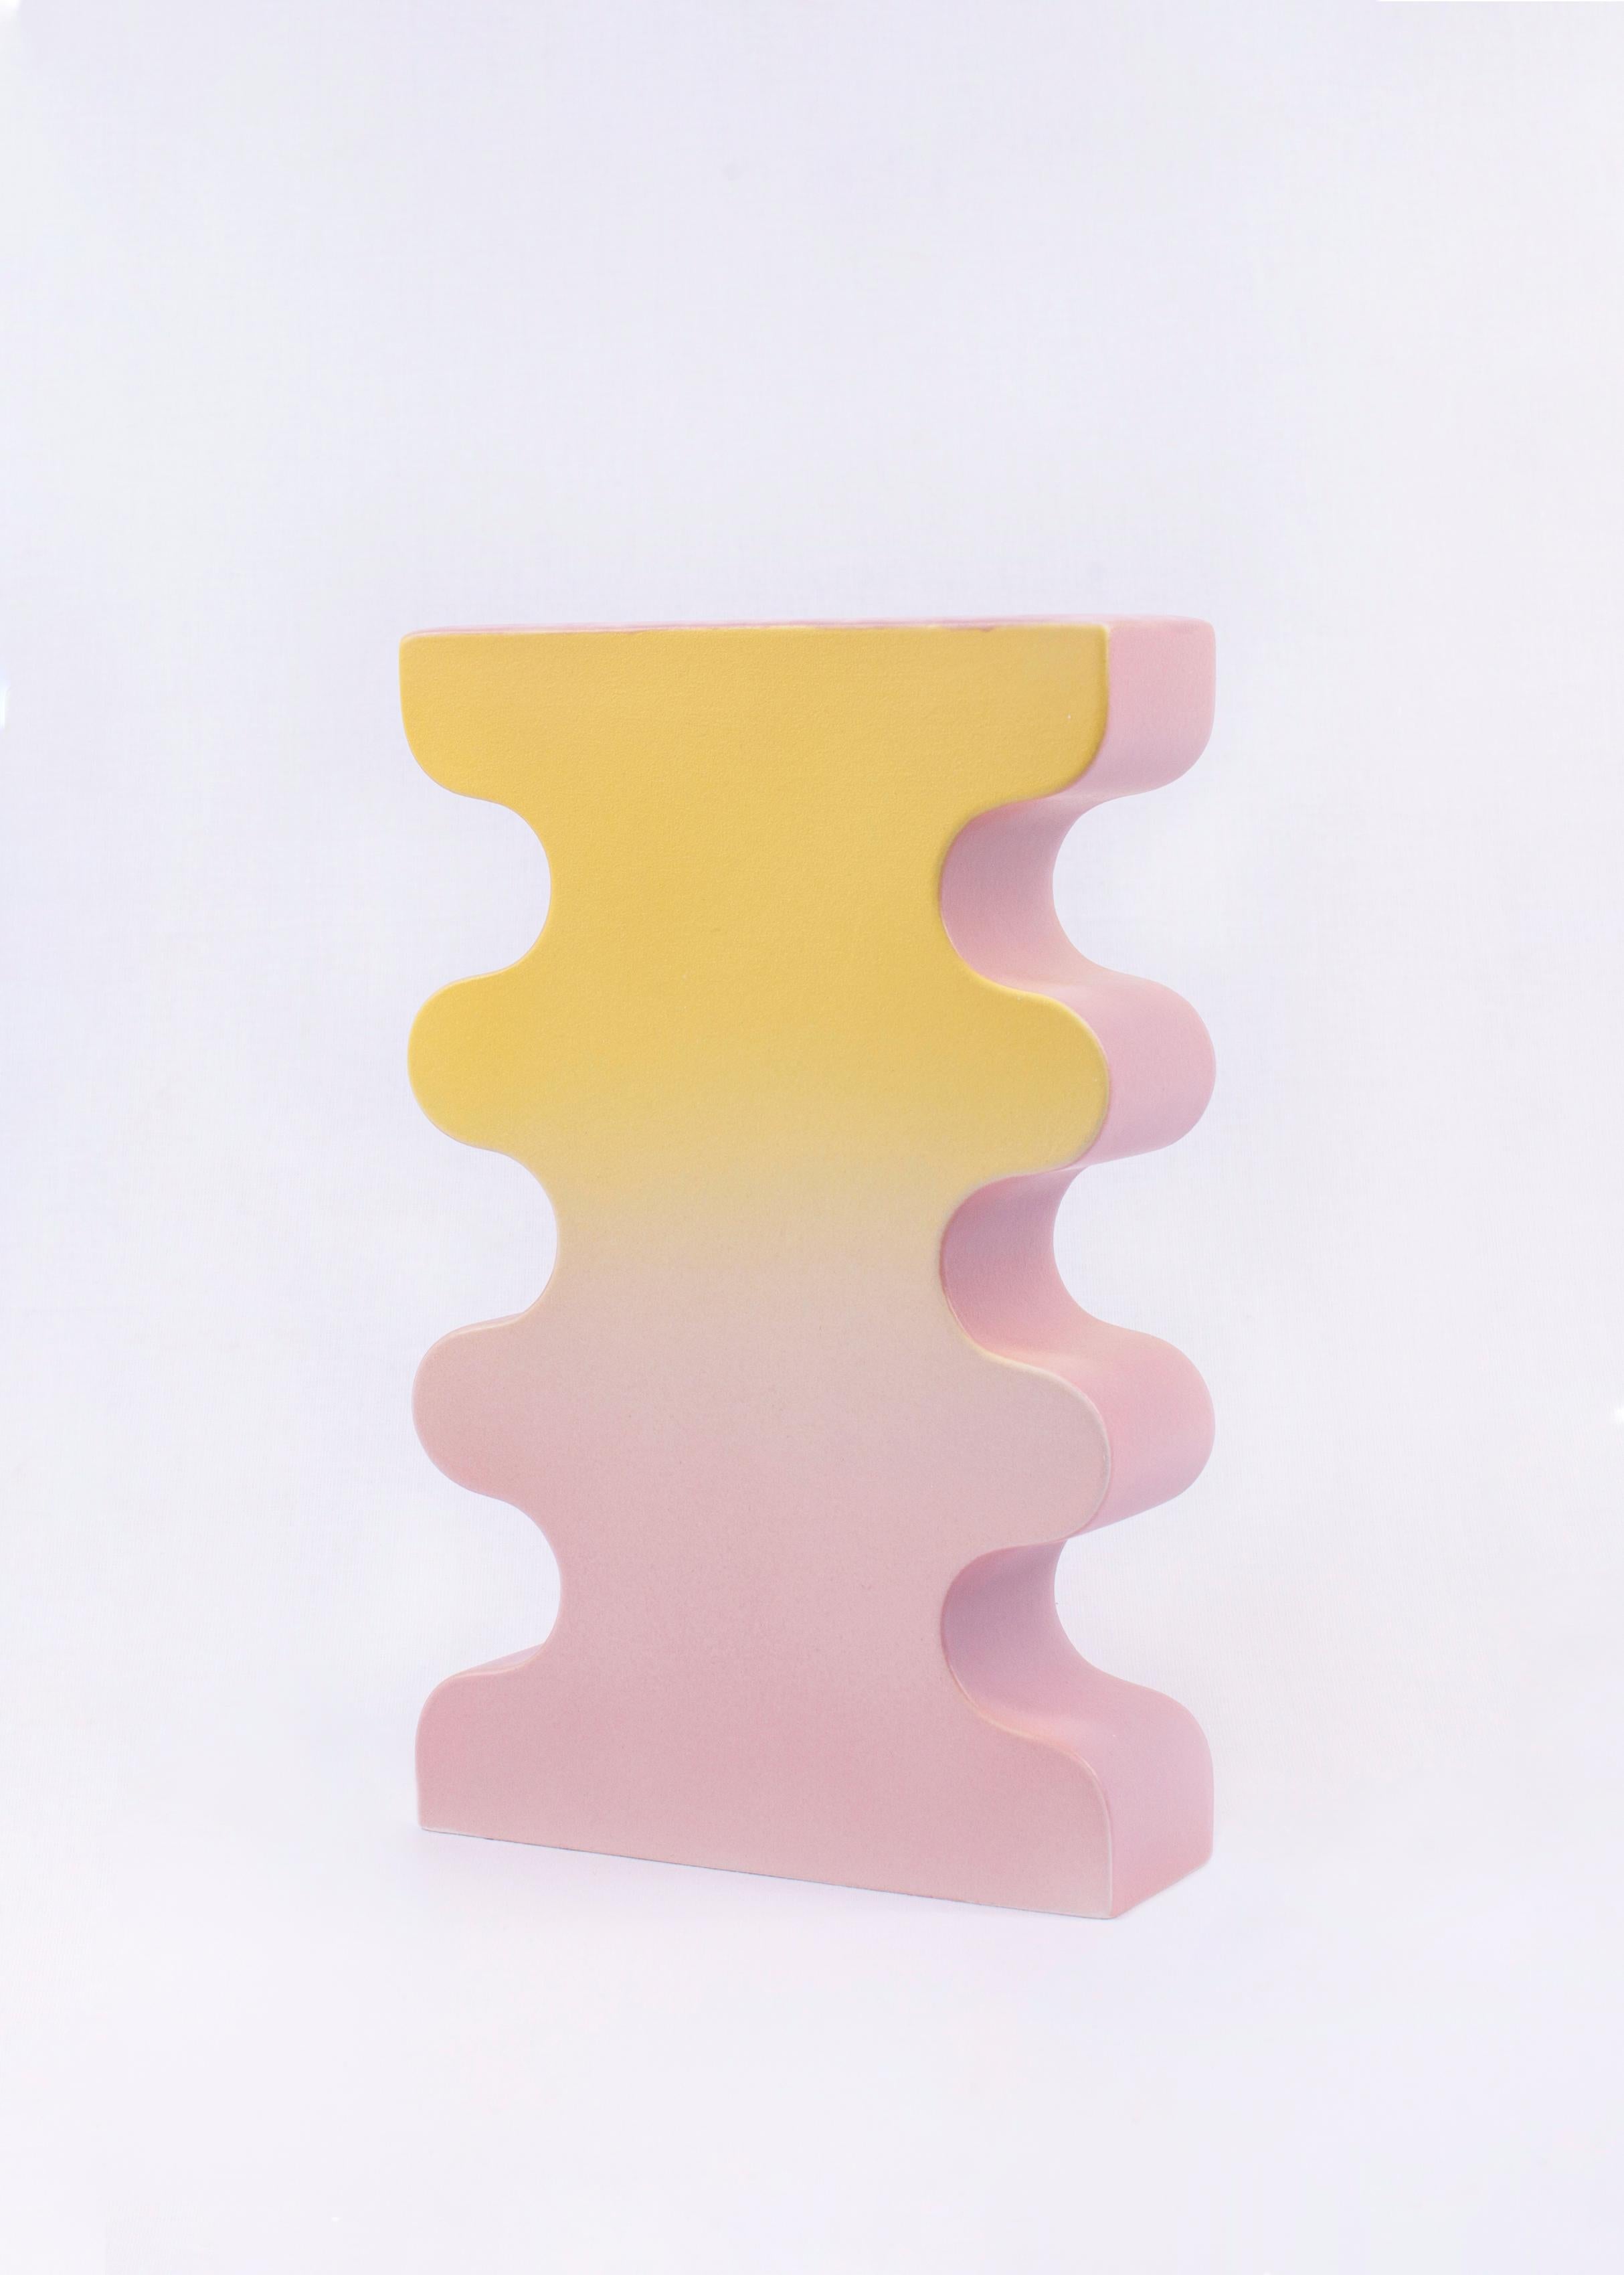 Barva Vase N. 4 by Pani Jurek

Model sell
Color : Yellow matt + Lila matt 

Size: 27 cm +17 cm x 5,5 cm. Due to the hand glazing process, colors and size may slightly vary.

Material: hand glazed ceramic, glaze + engobe

Barva vases